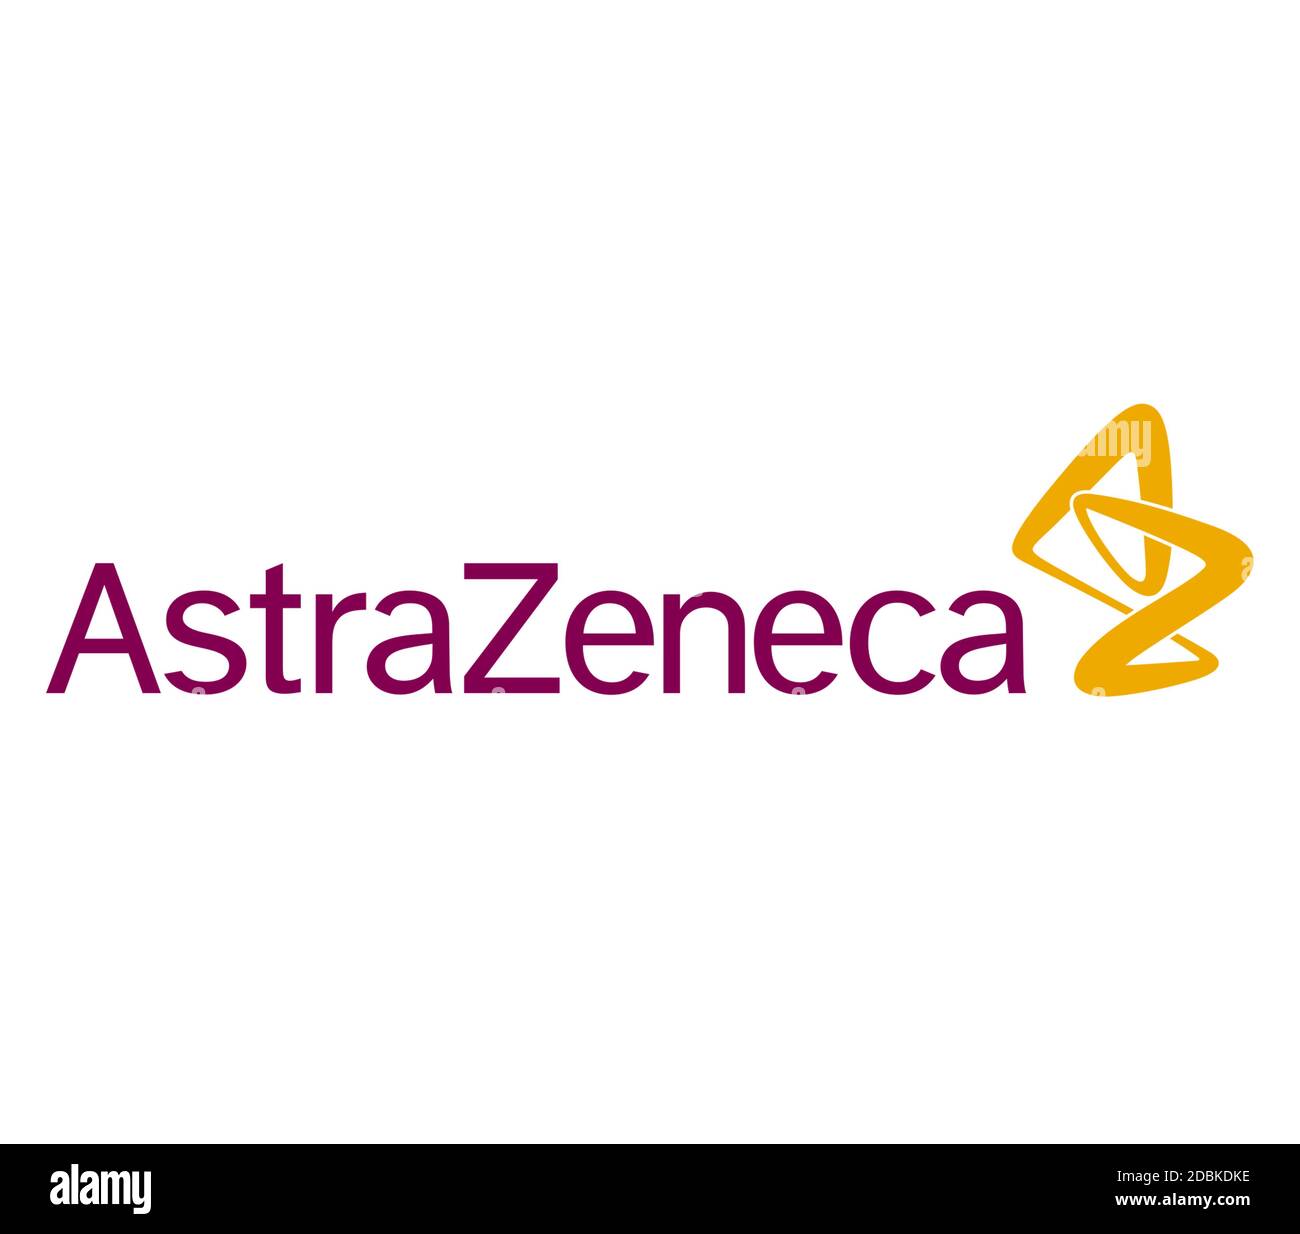 AstraZeneca logo Stock Photo